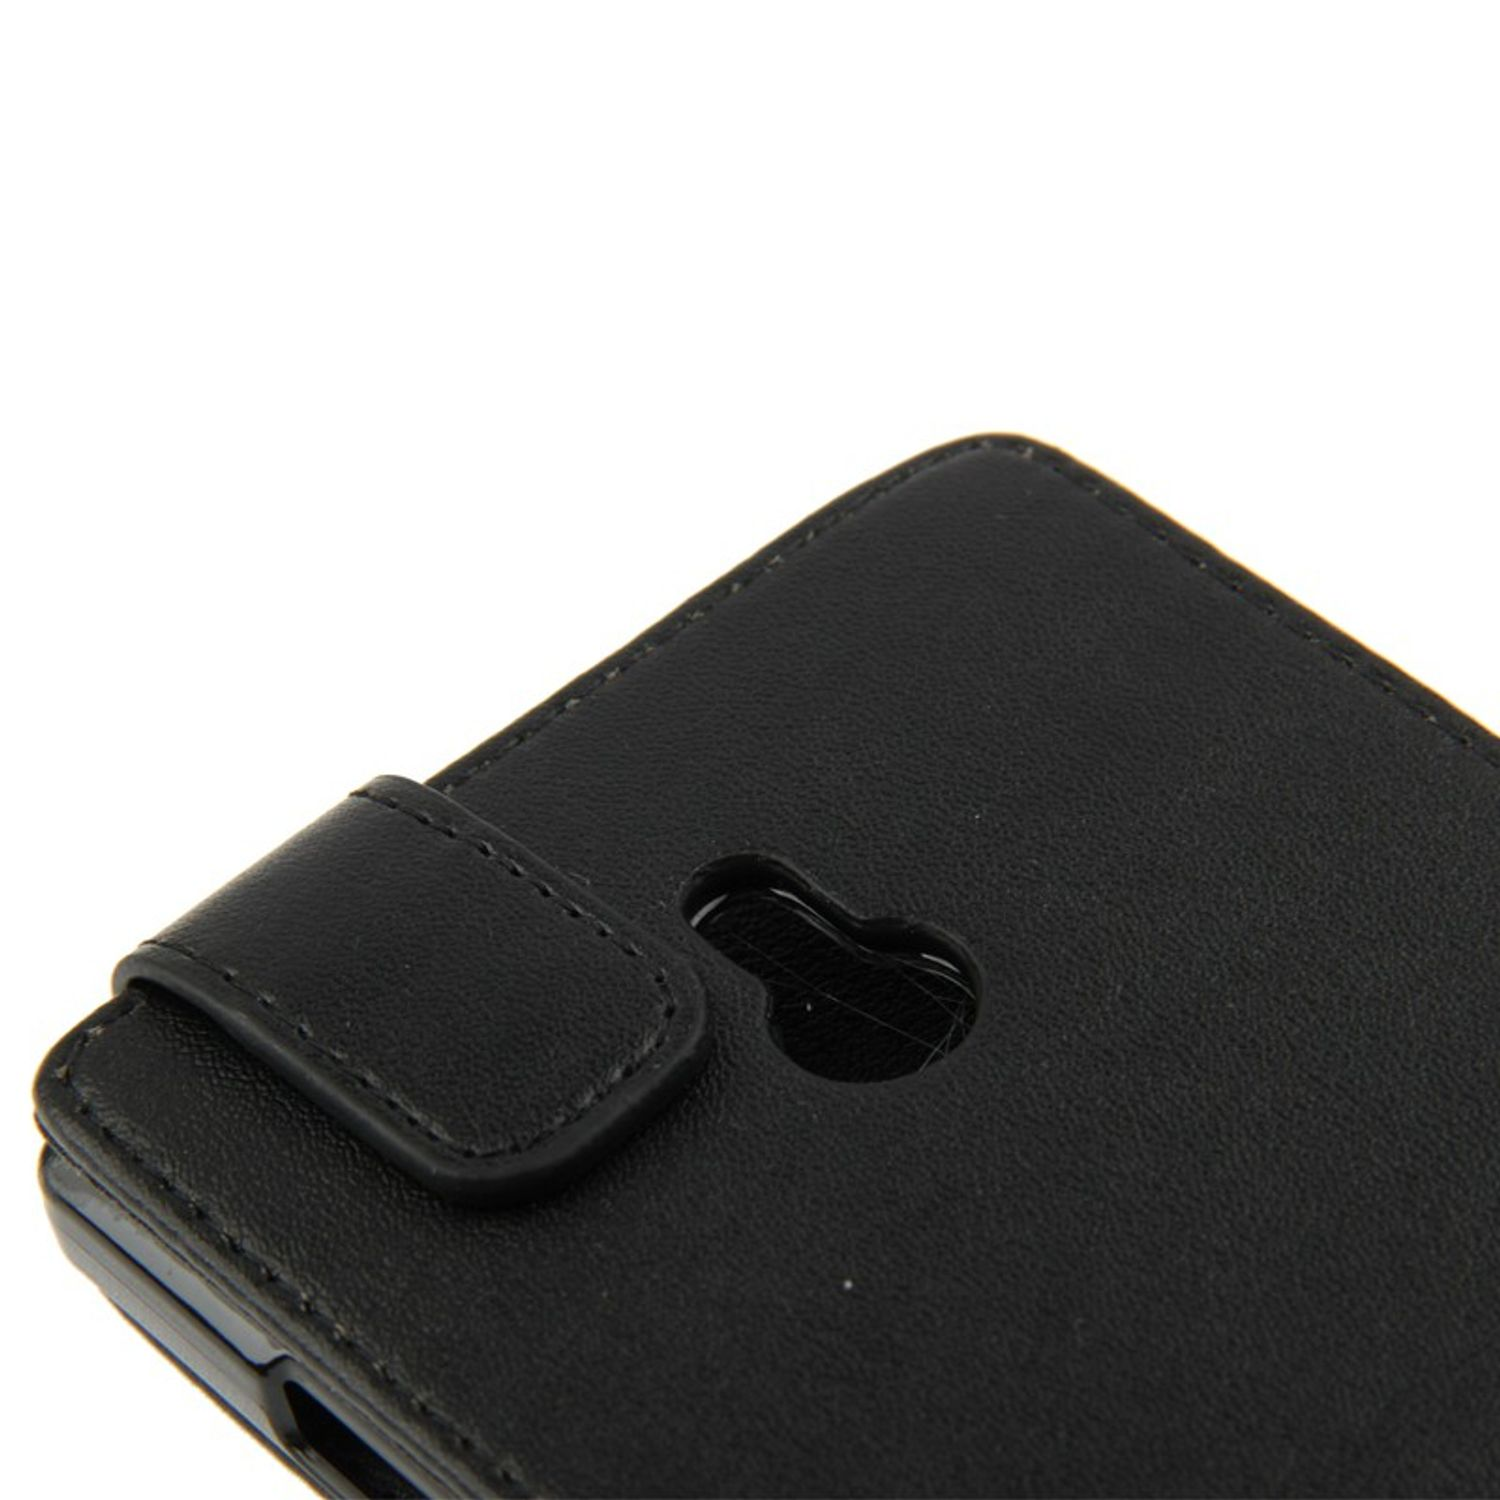 DESIGN Nokia, Backcover, Schwarz KÖNIG XL, Handyhülle,